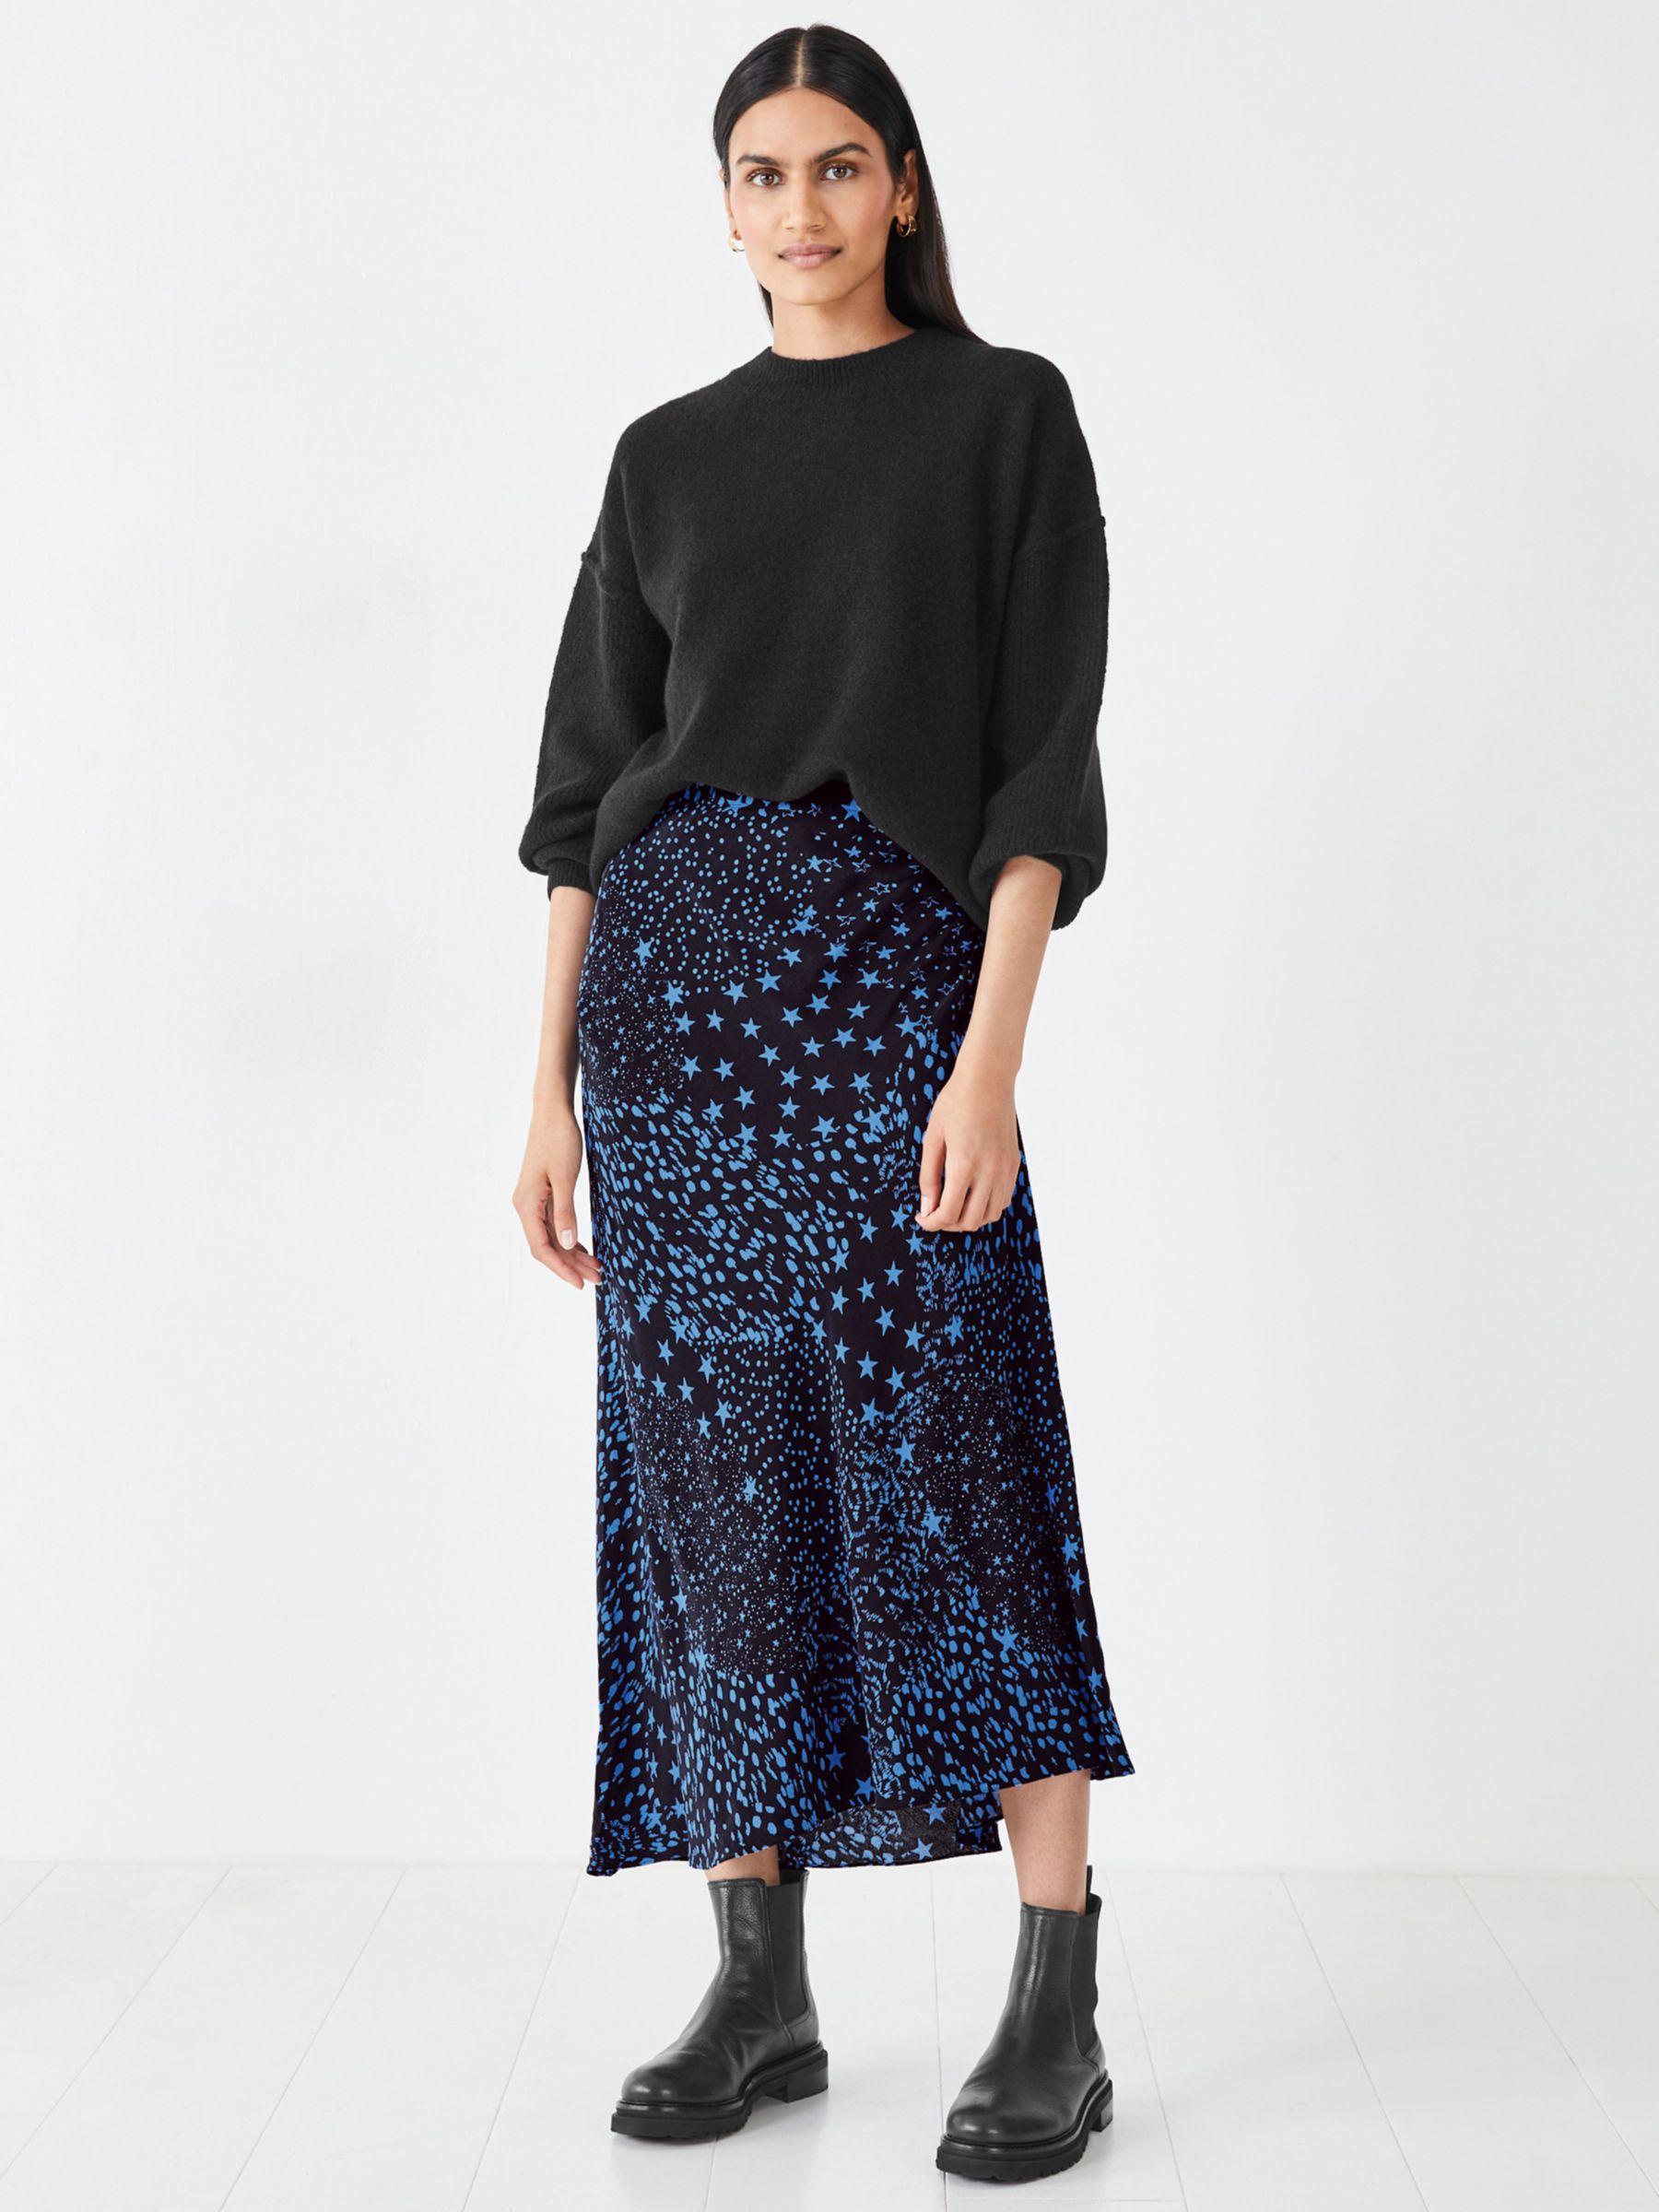 HUSH Lily Patchwork Star Midi Skirt, Black/Blue at John Lewis & Partners